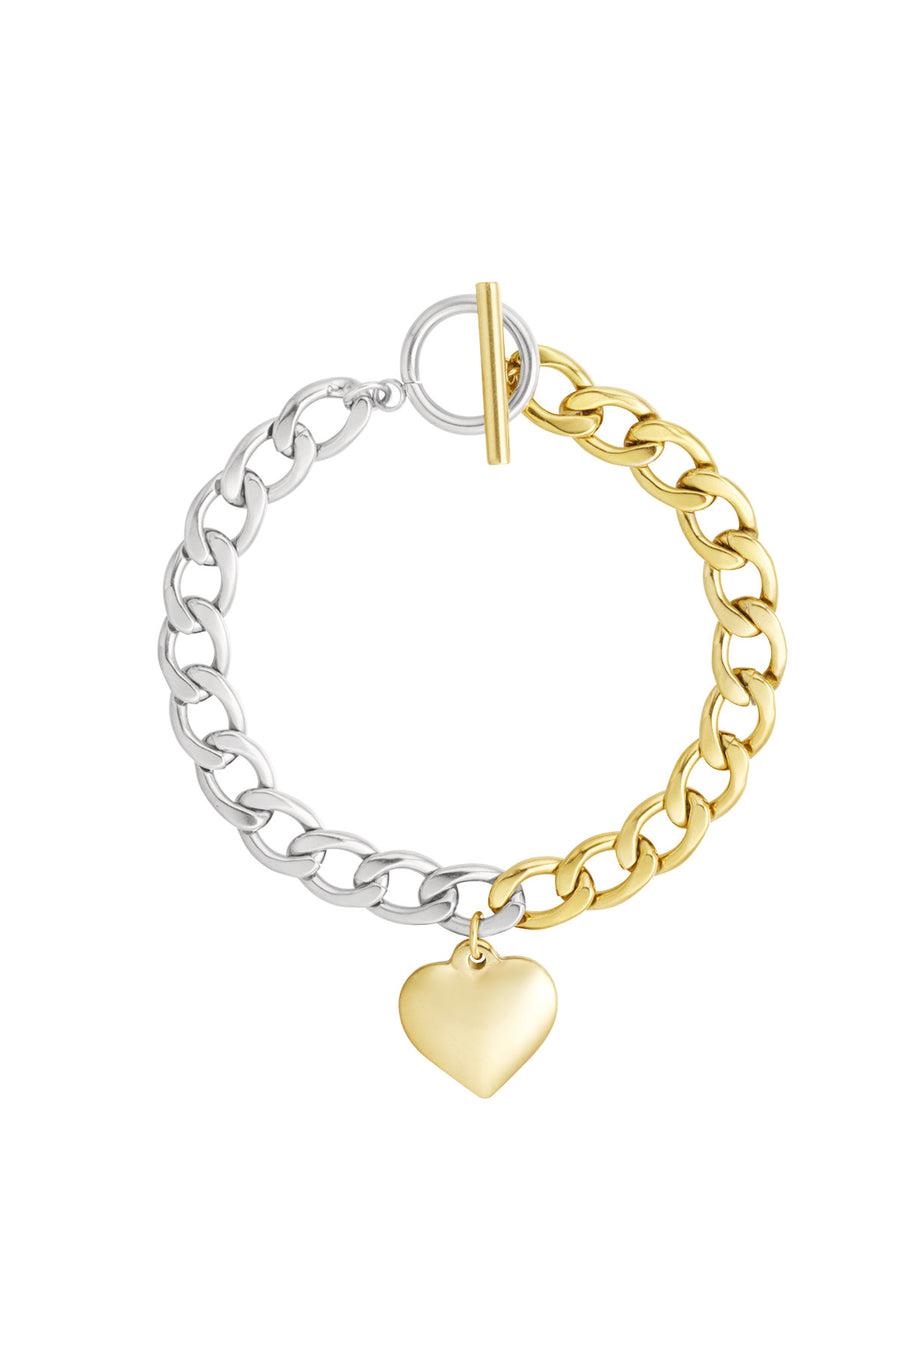 Love Bracelet Gold & Silver Available